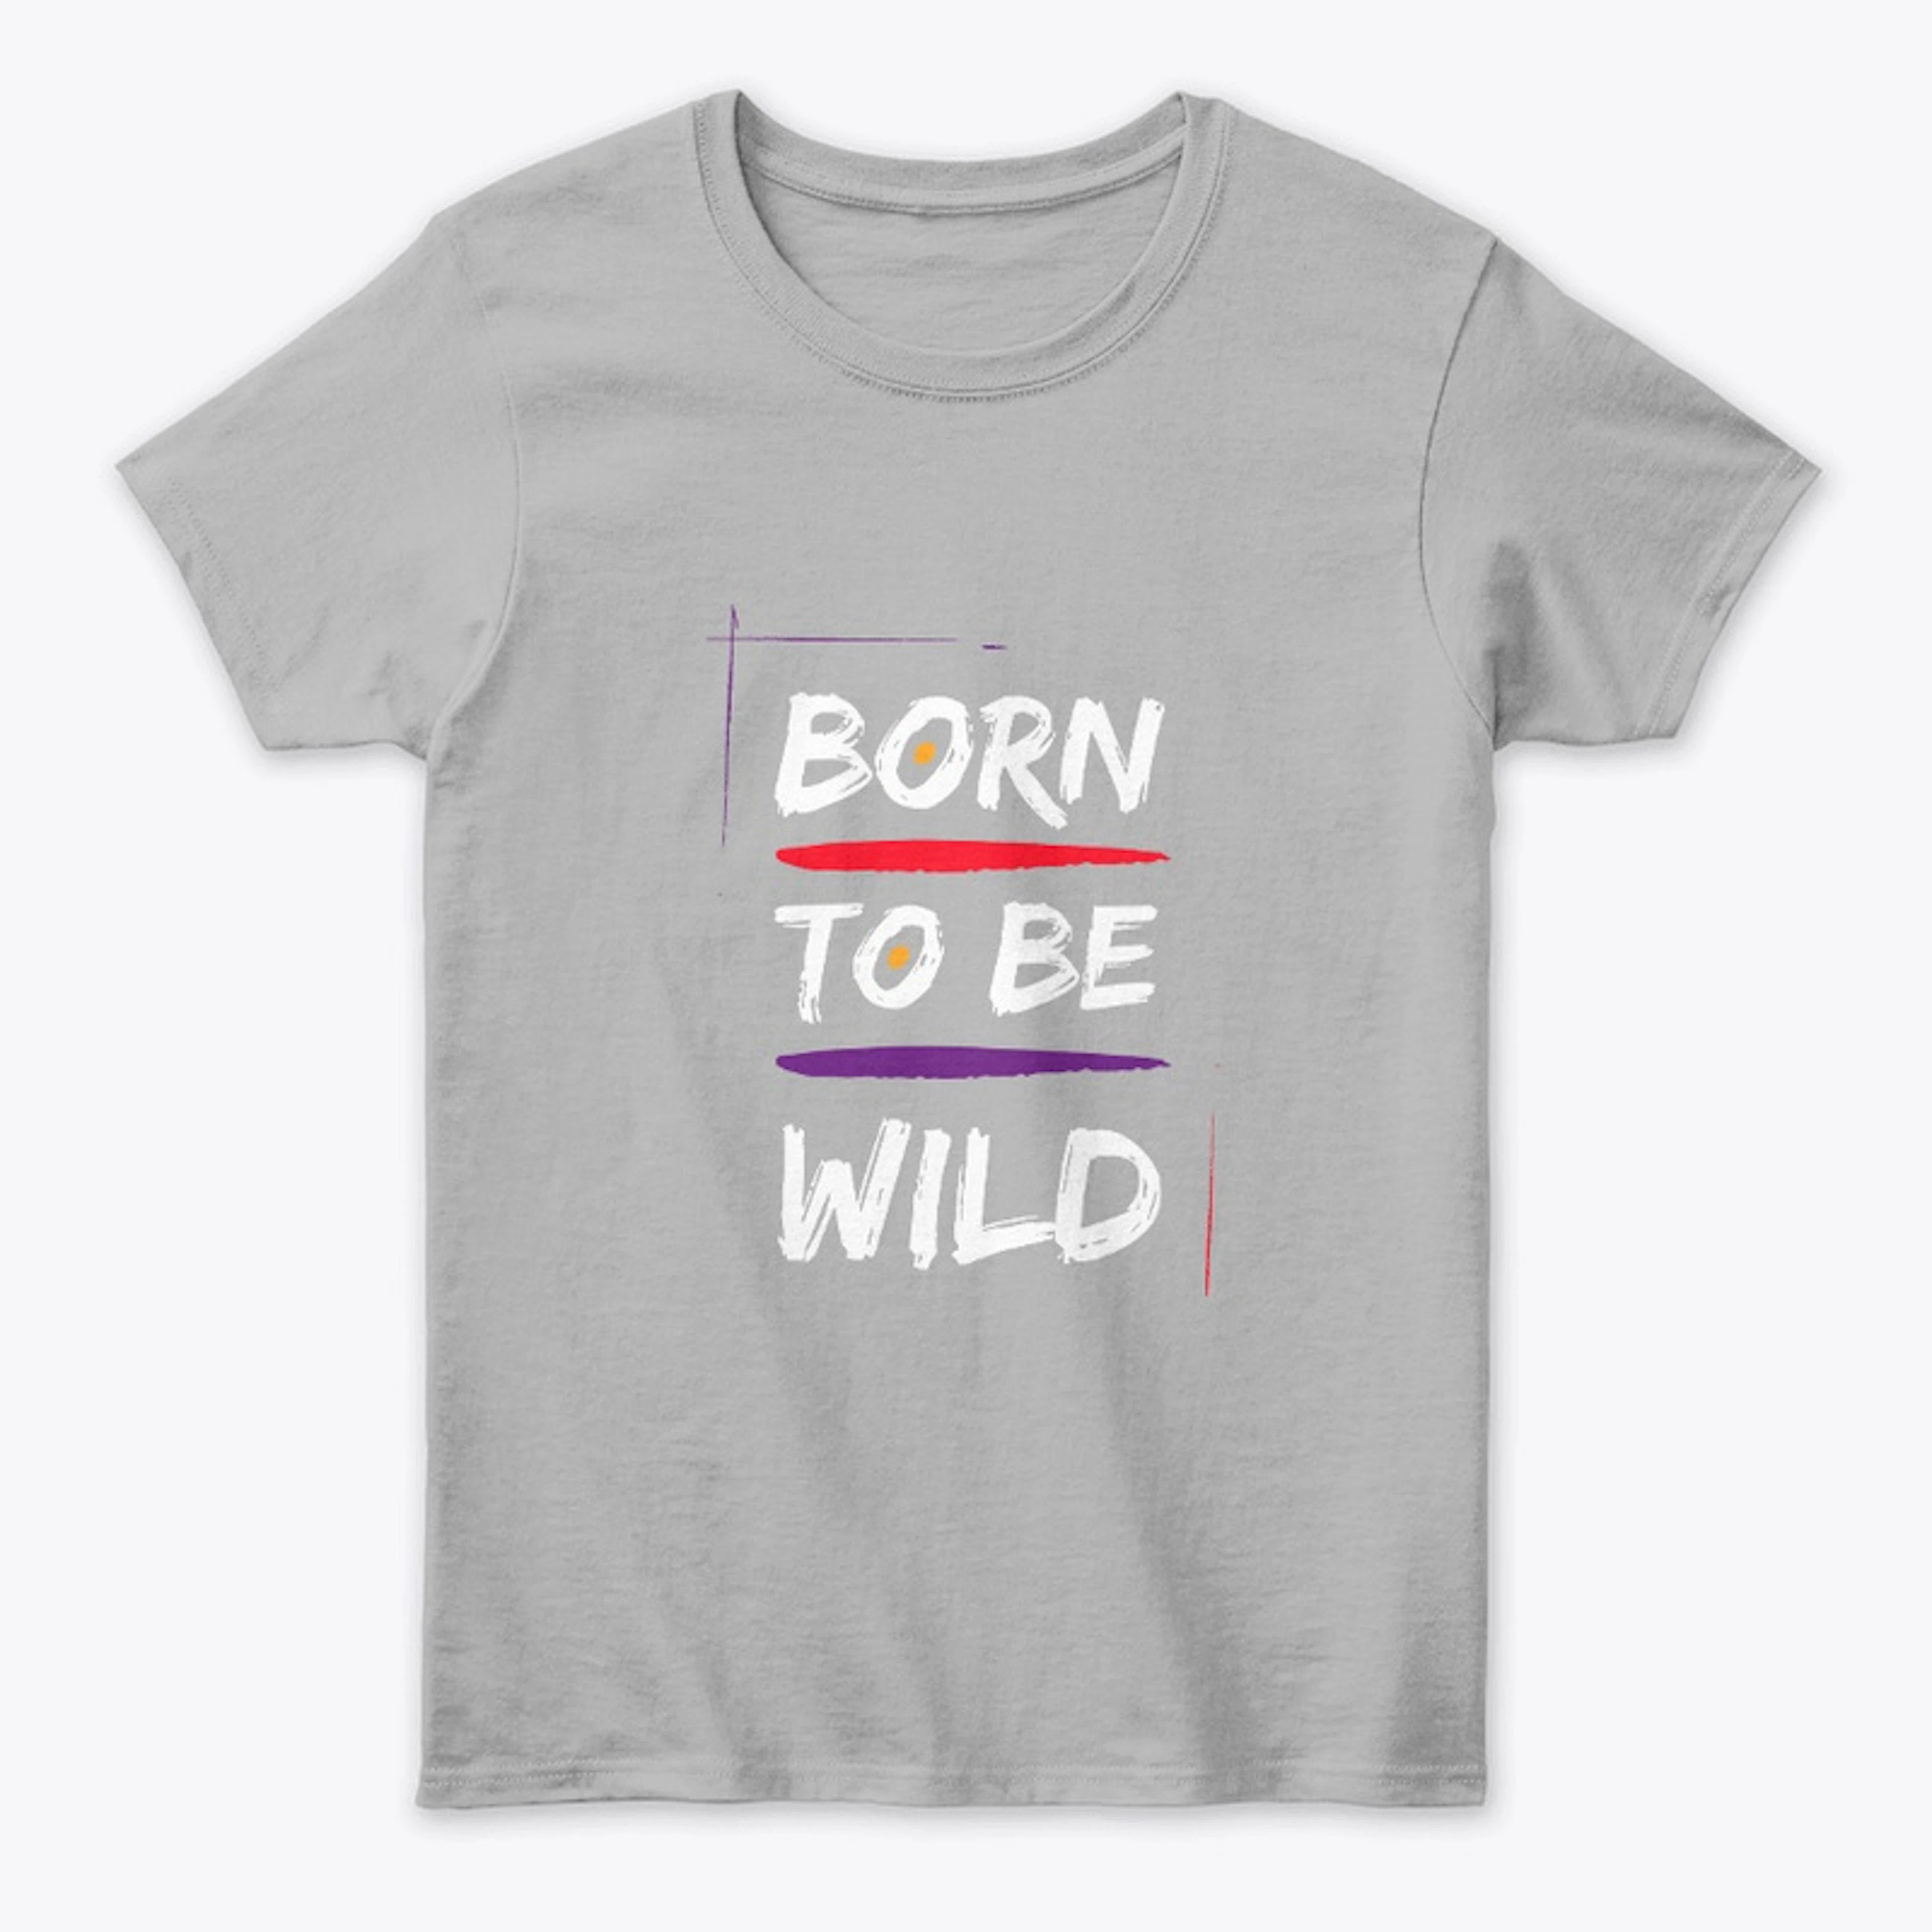 Born to be WILD